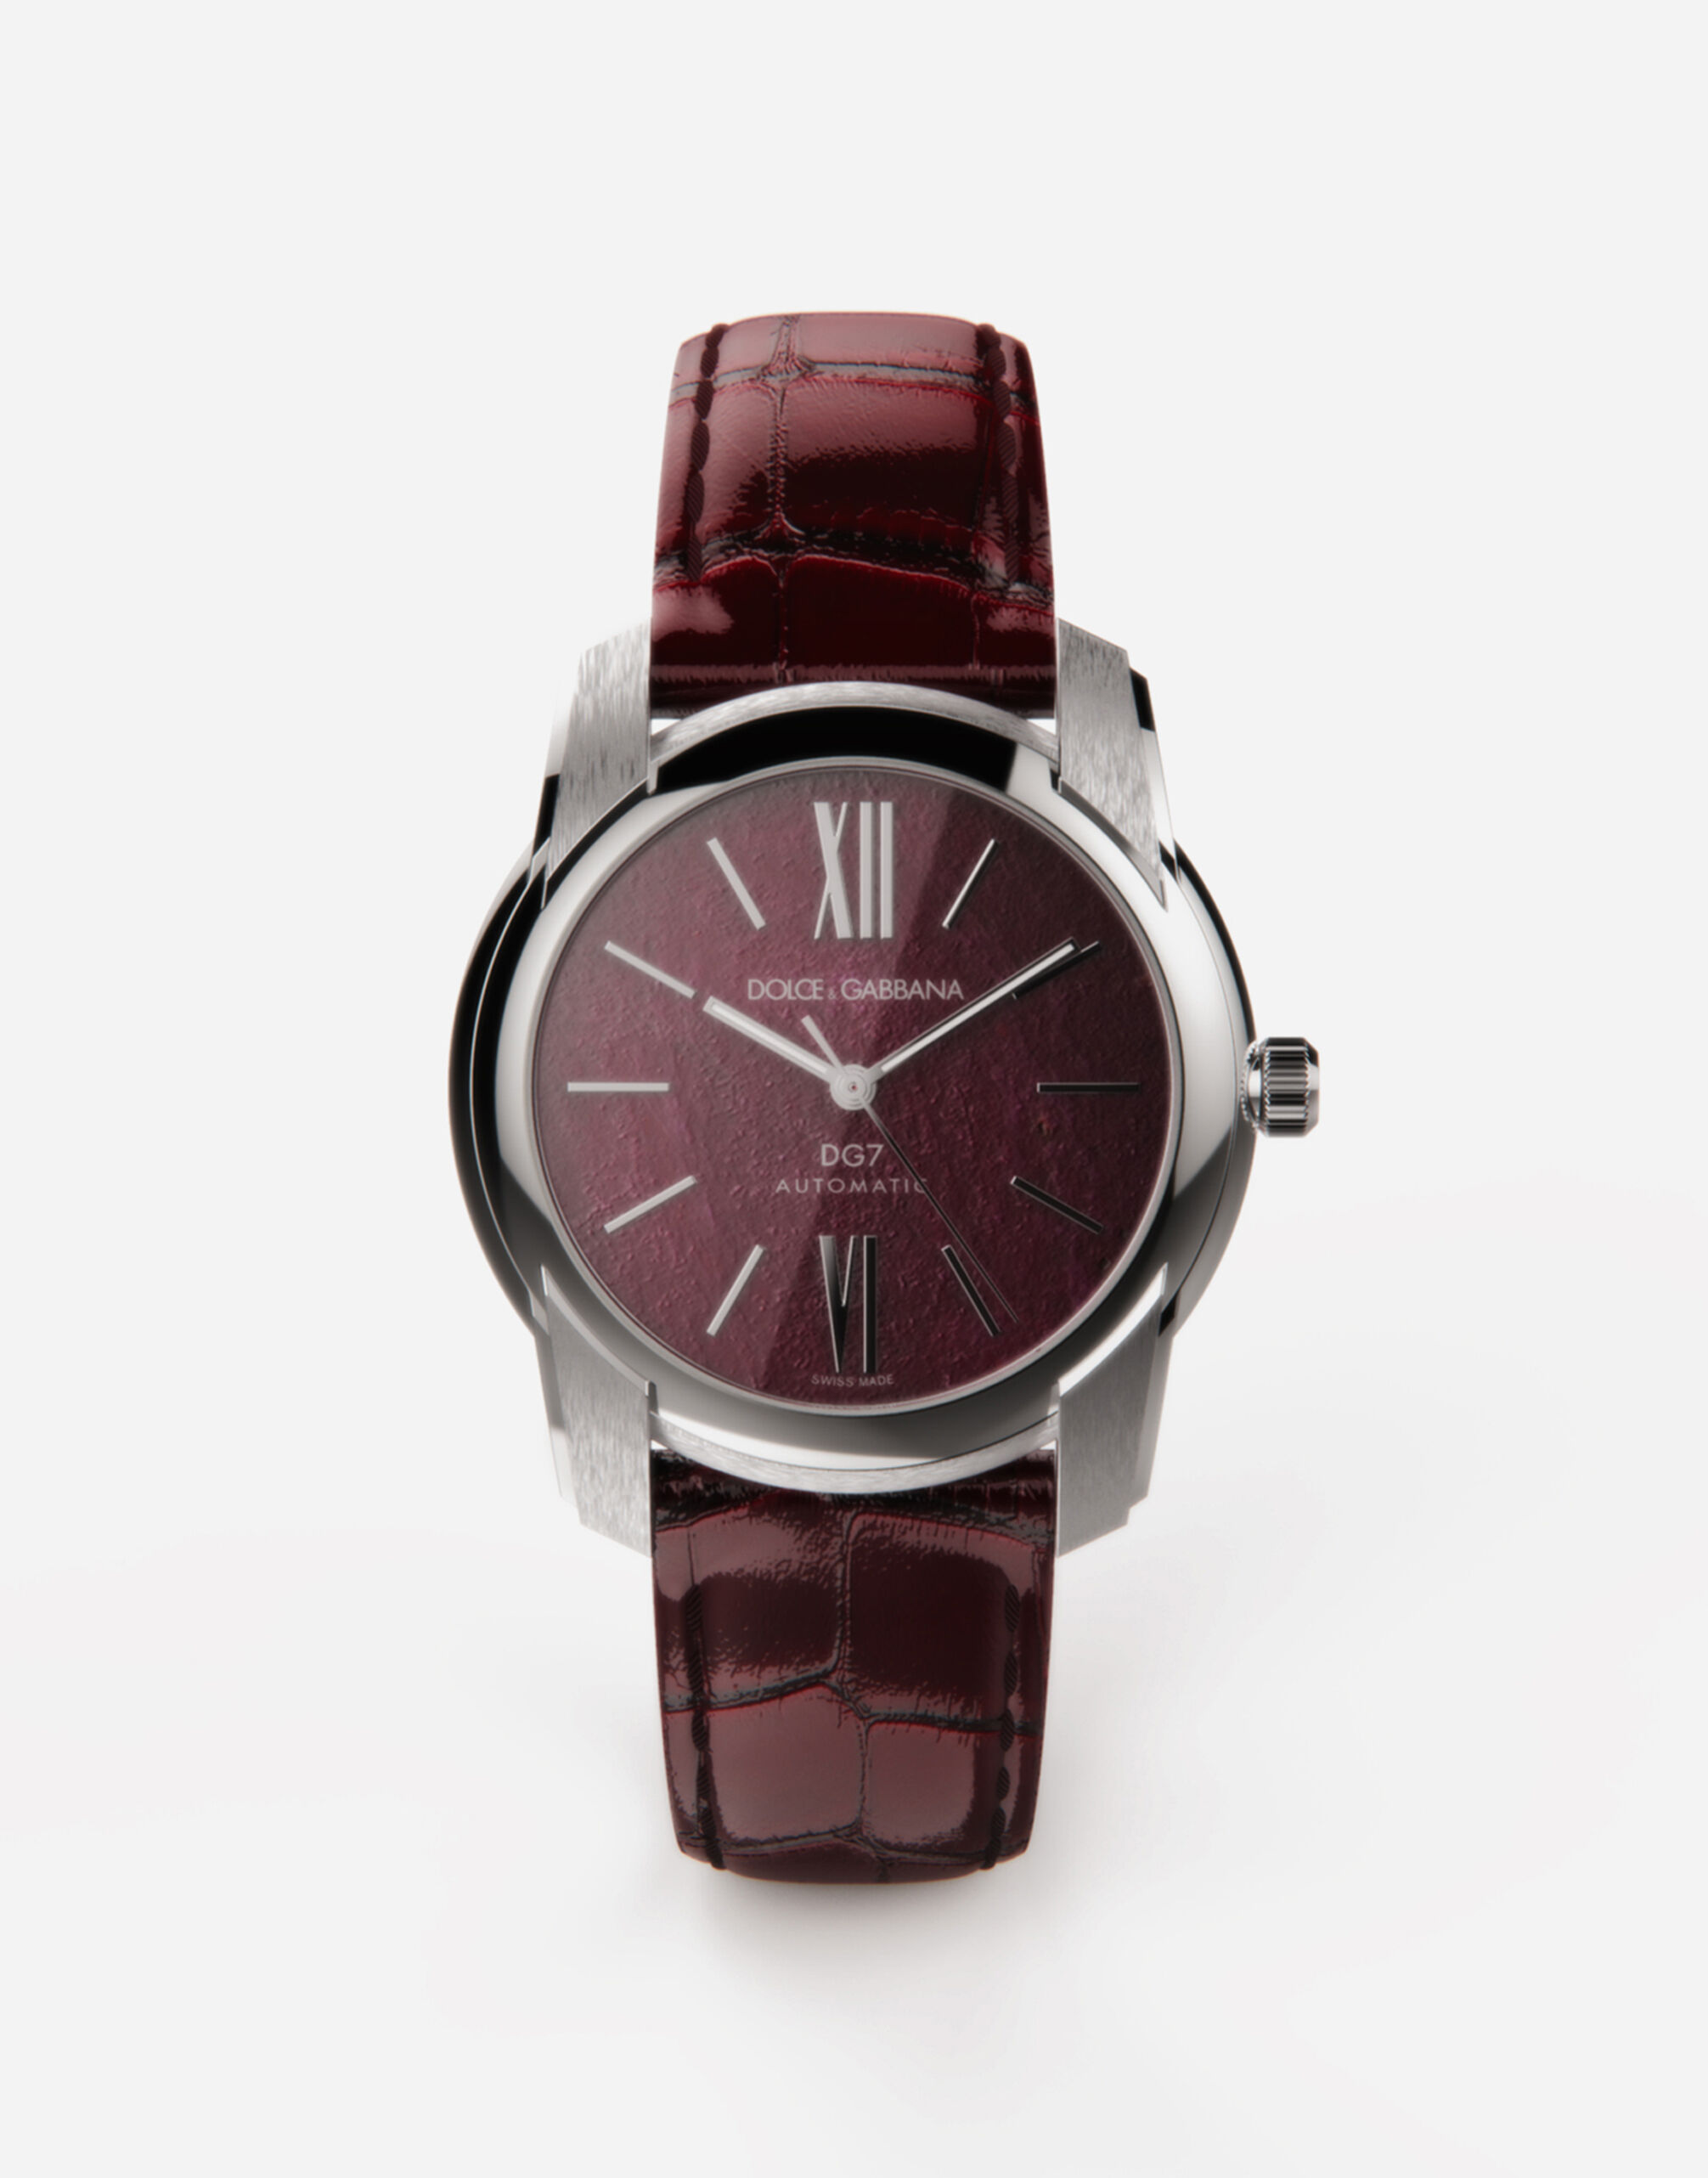 Dolce & Gabbana DG7 watch in steel with ruby Black WWFE1SWW066